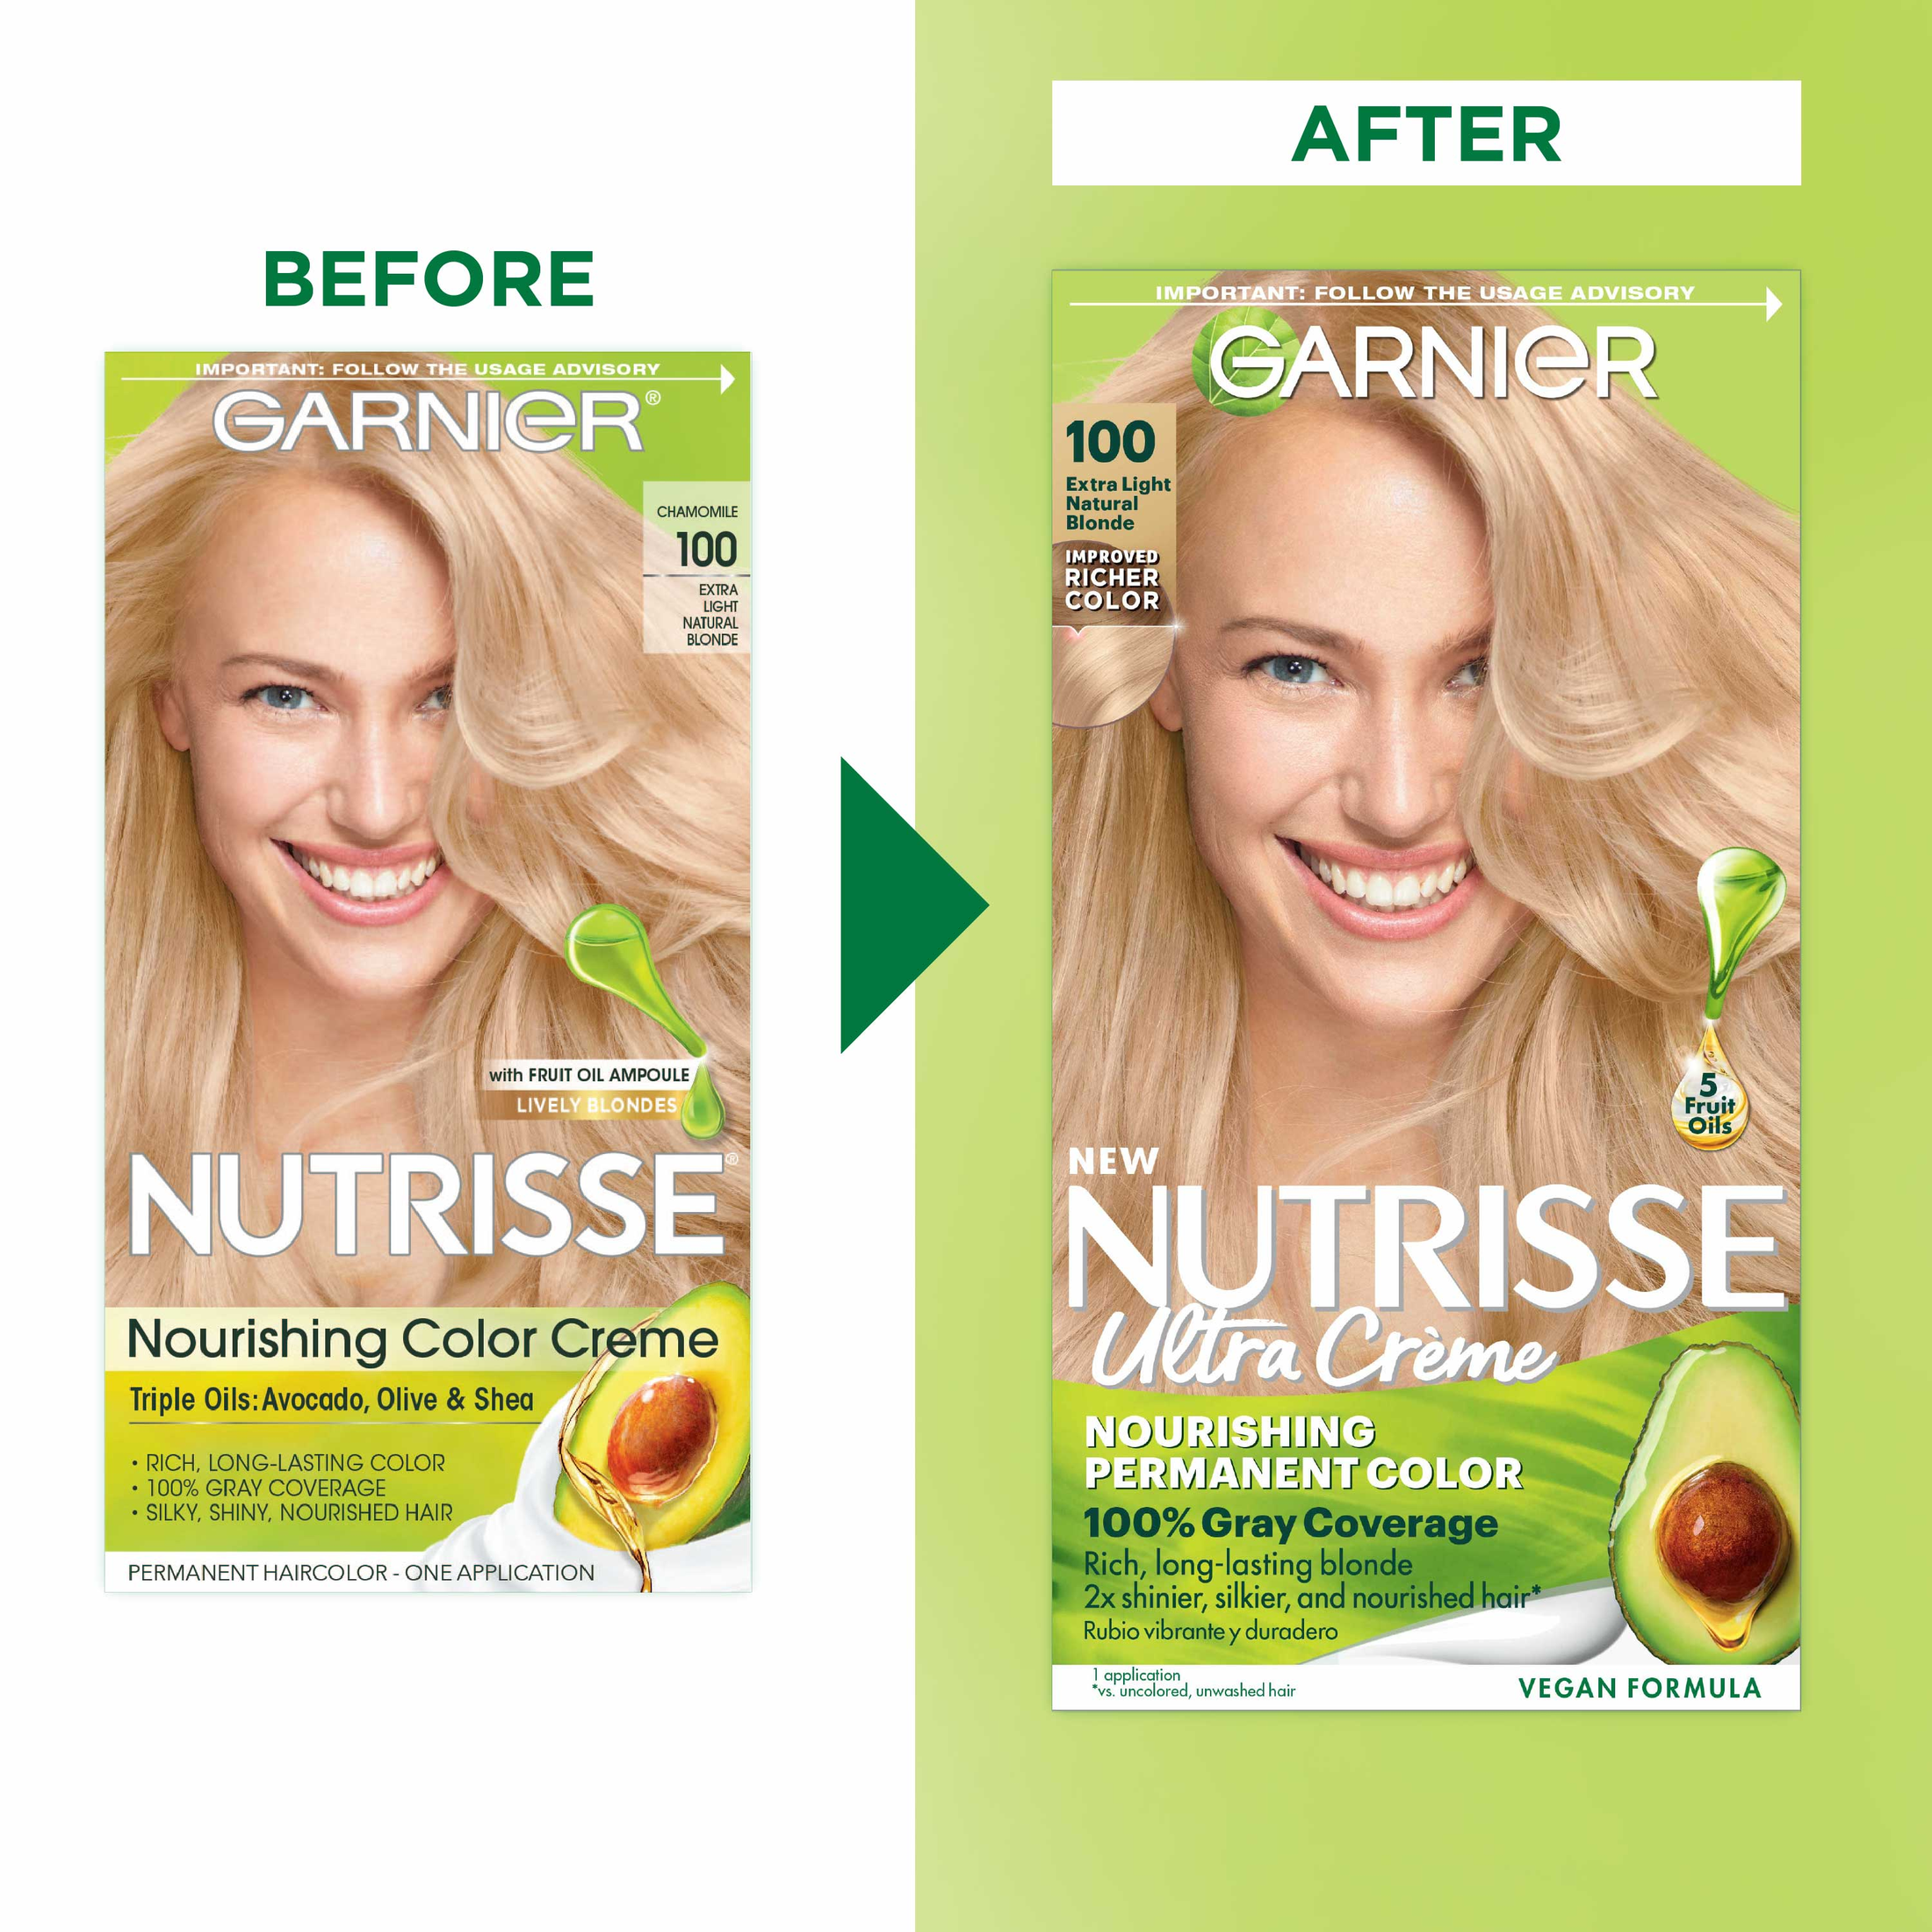 Garnier Nutrisse Nourishing Hair Color Creme, 100 Extra Light Natural Blonde Chamomile - image 3 of 11